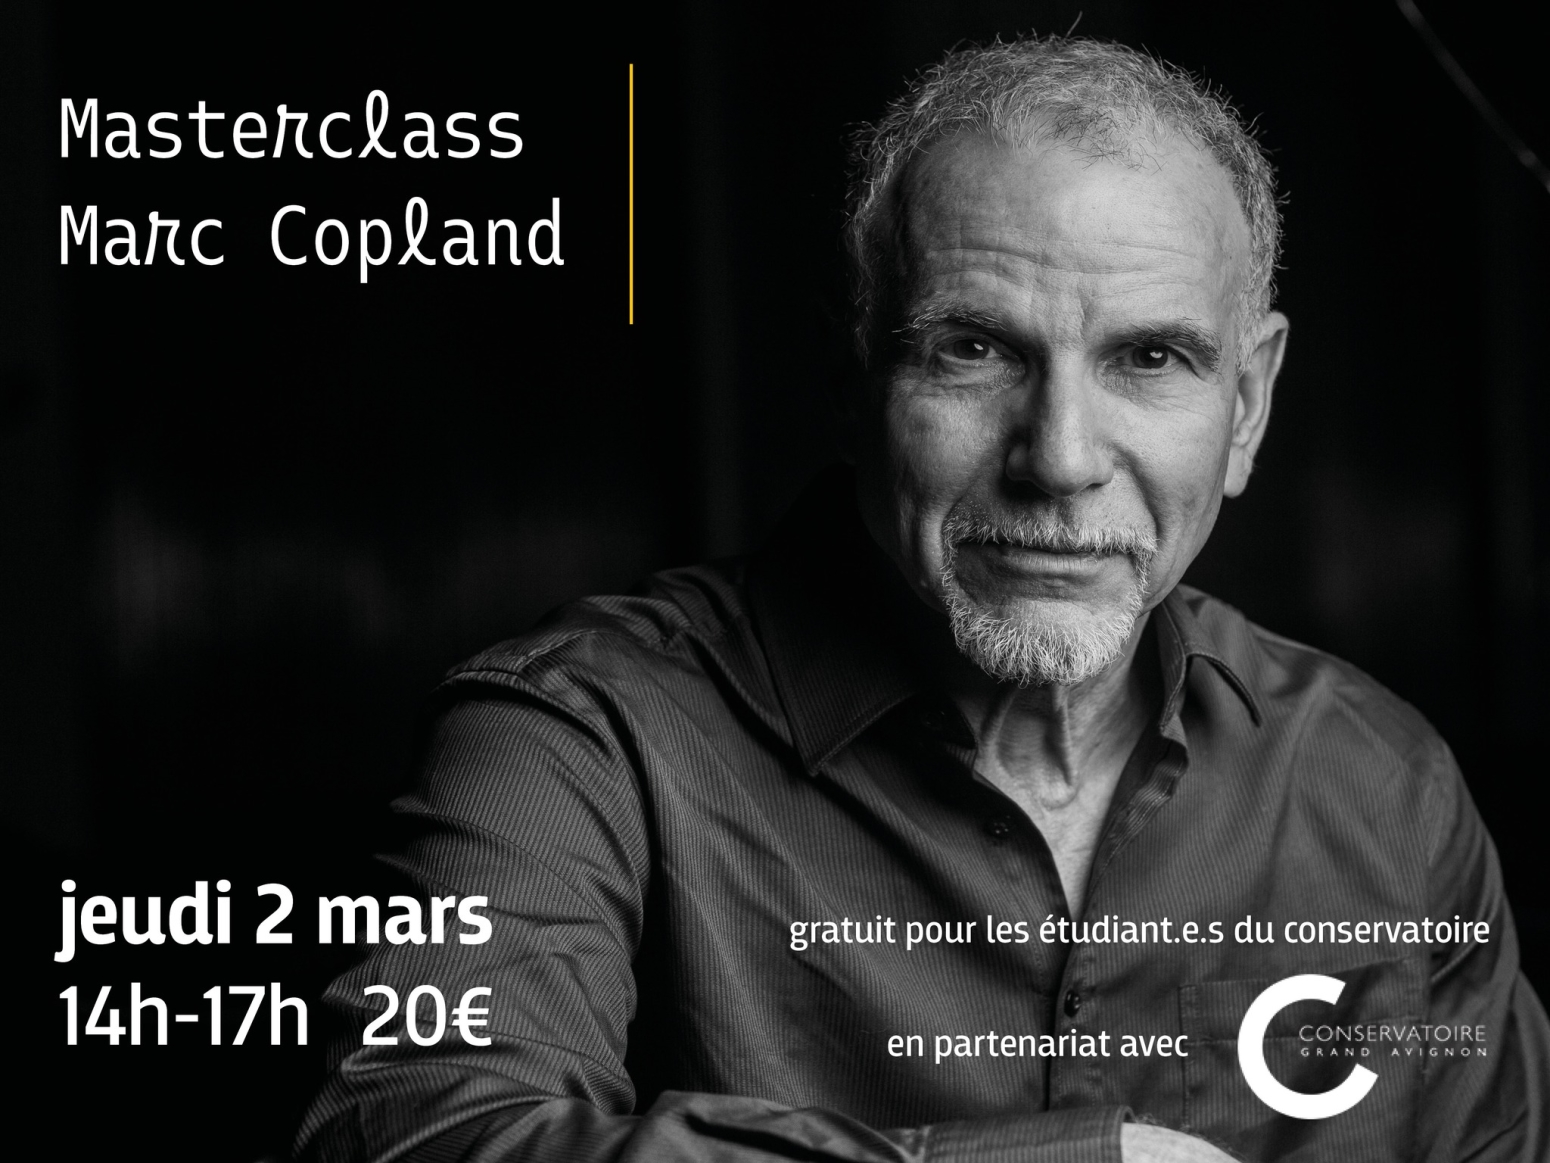 Marc Copland master class 020323 